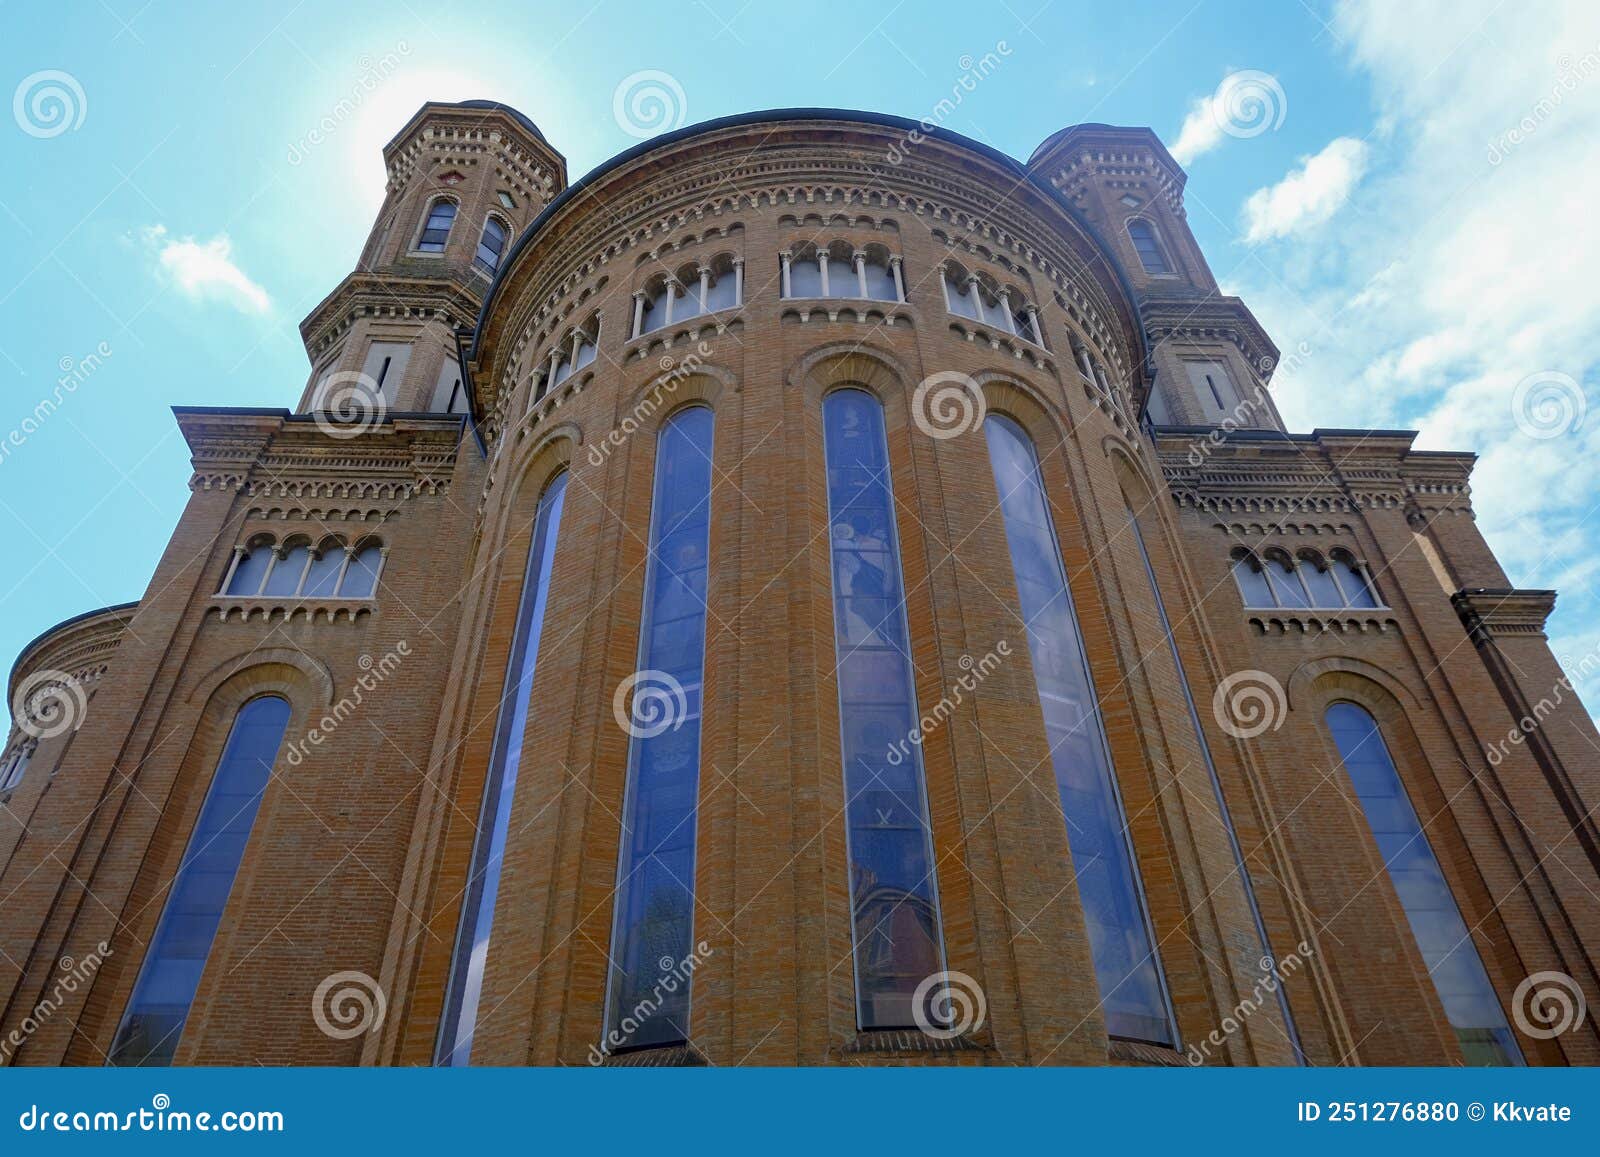 facade of monumental cathedral in modena, italy, tempio monumentale ai caduti di guerra across the blue sky from beneath